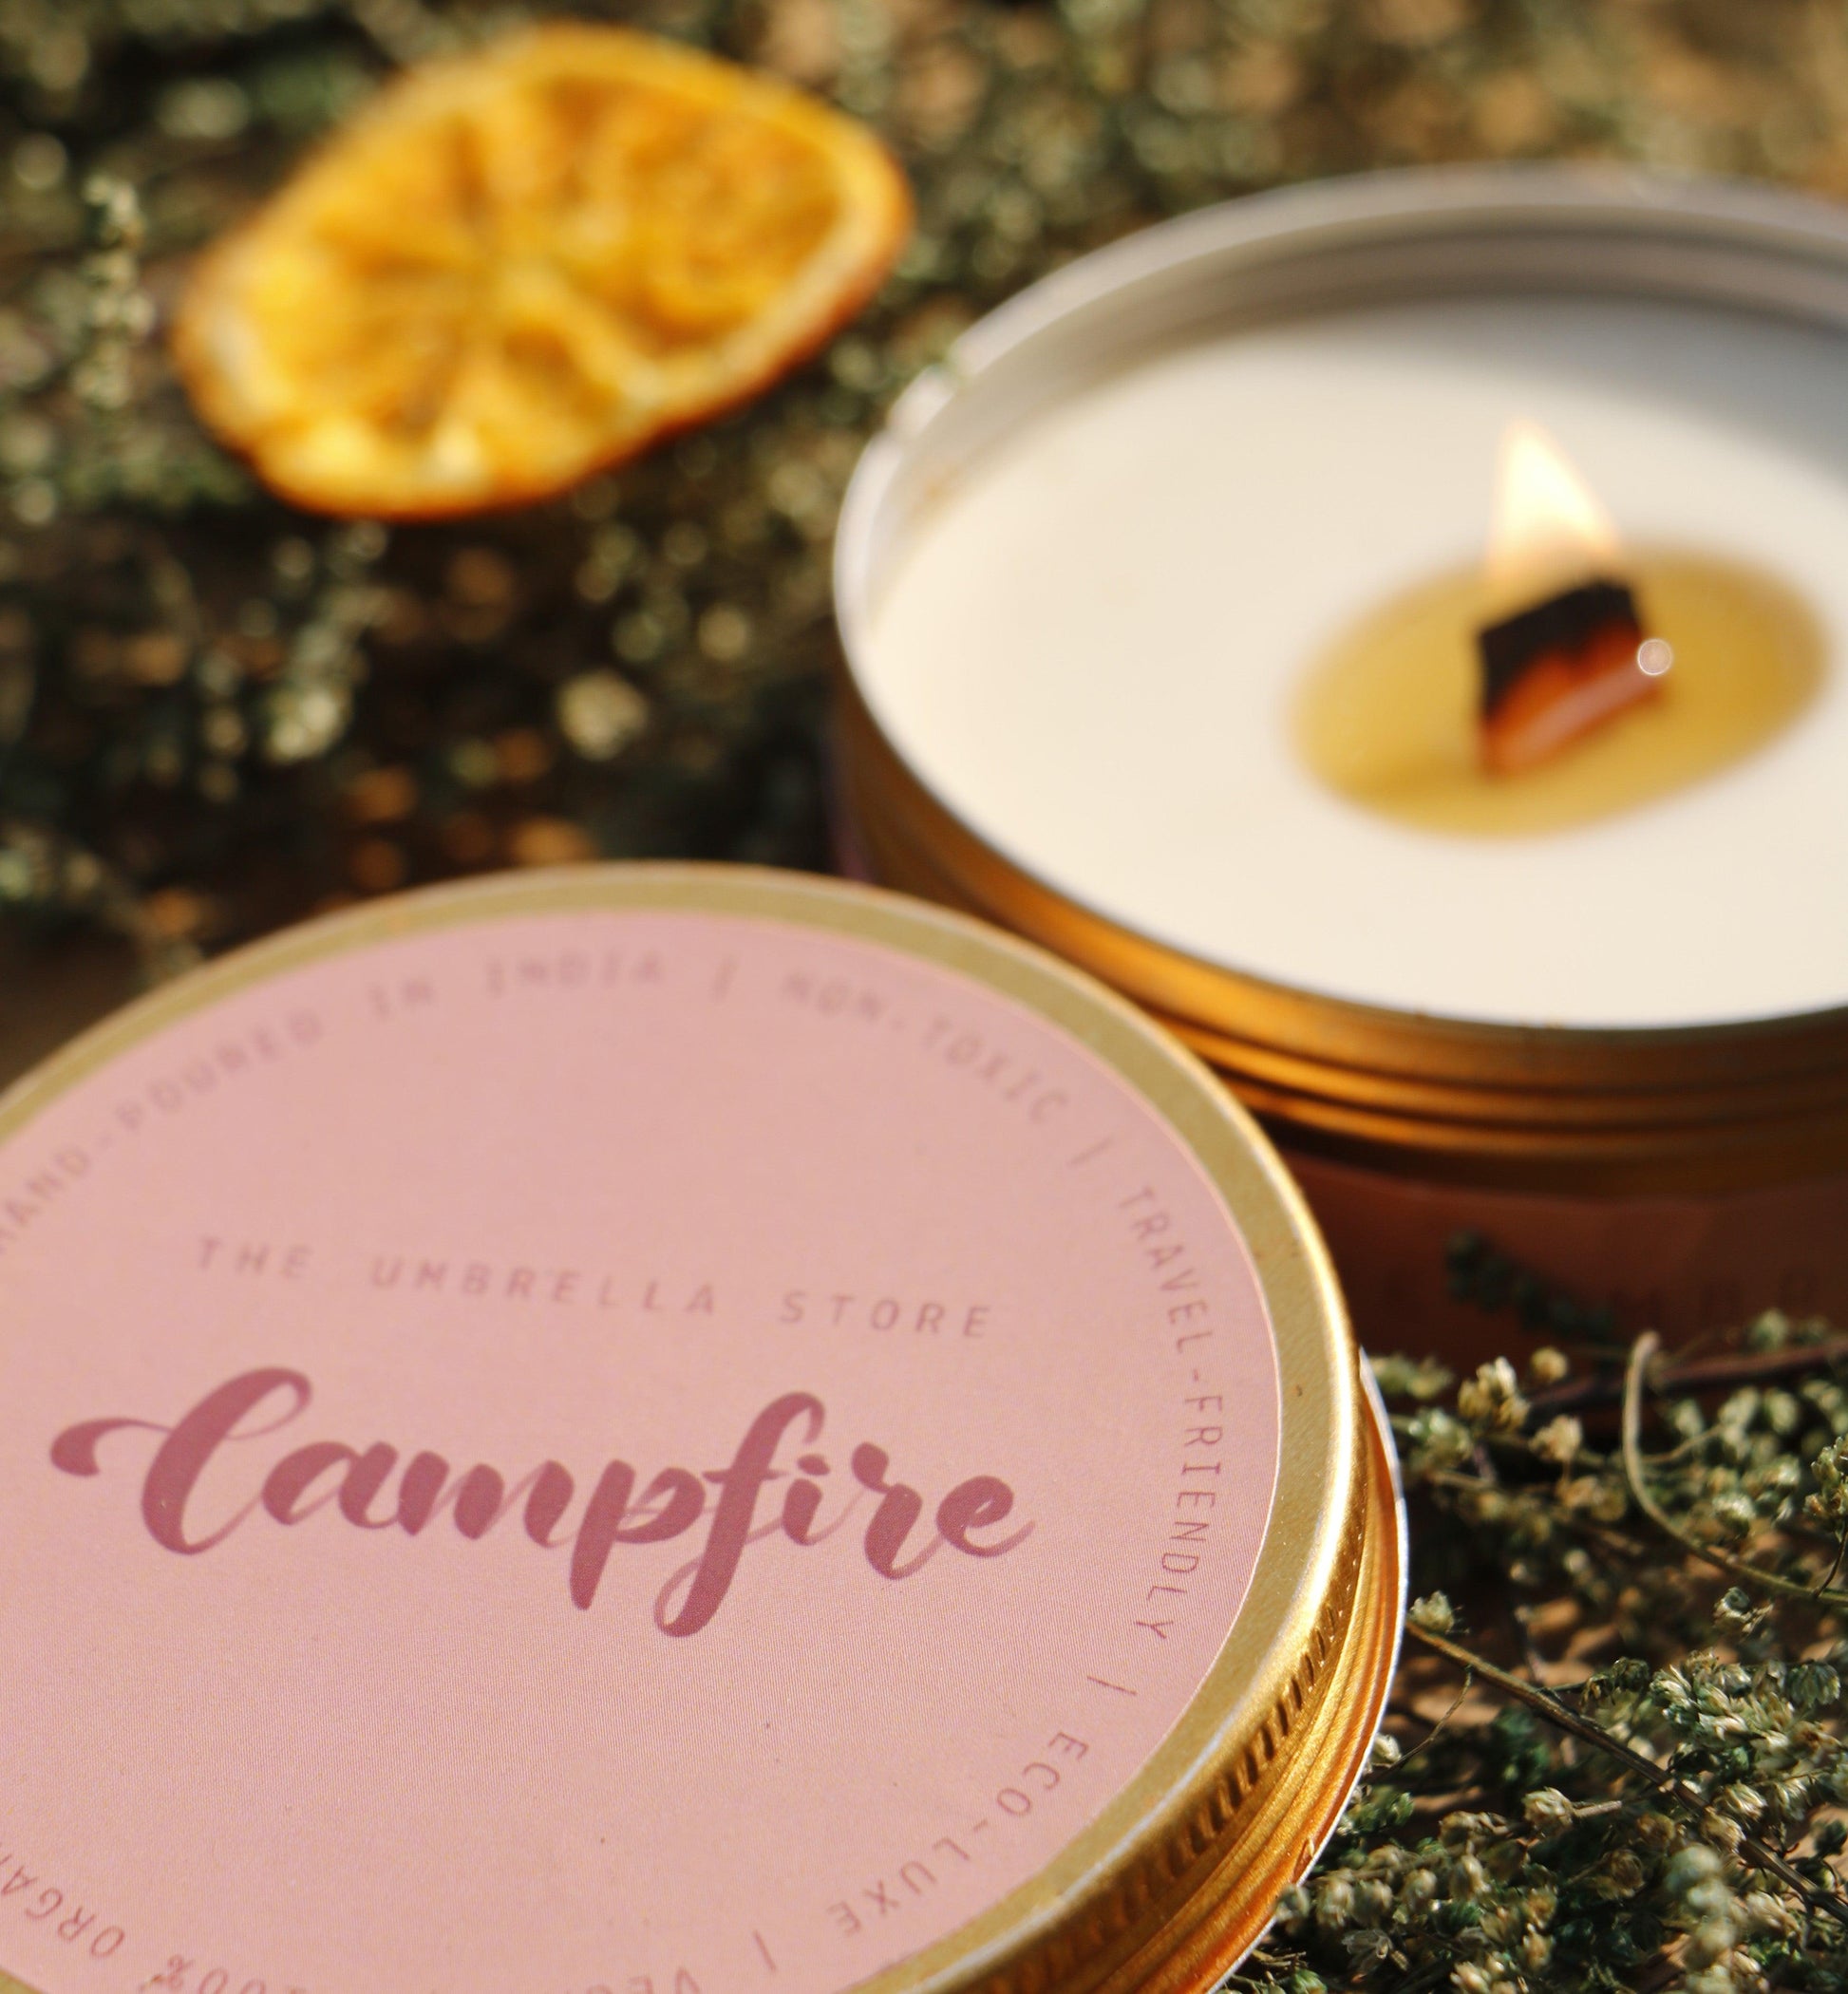 Campfire scented candle - The Umbrella store